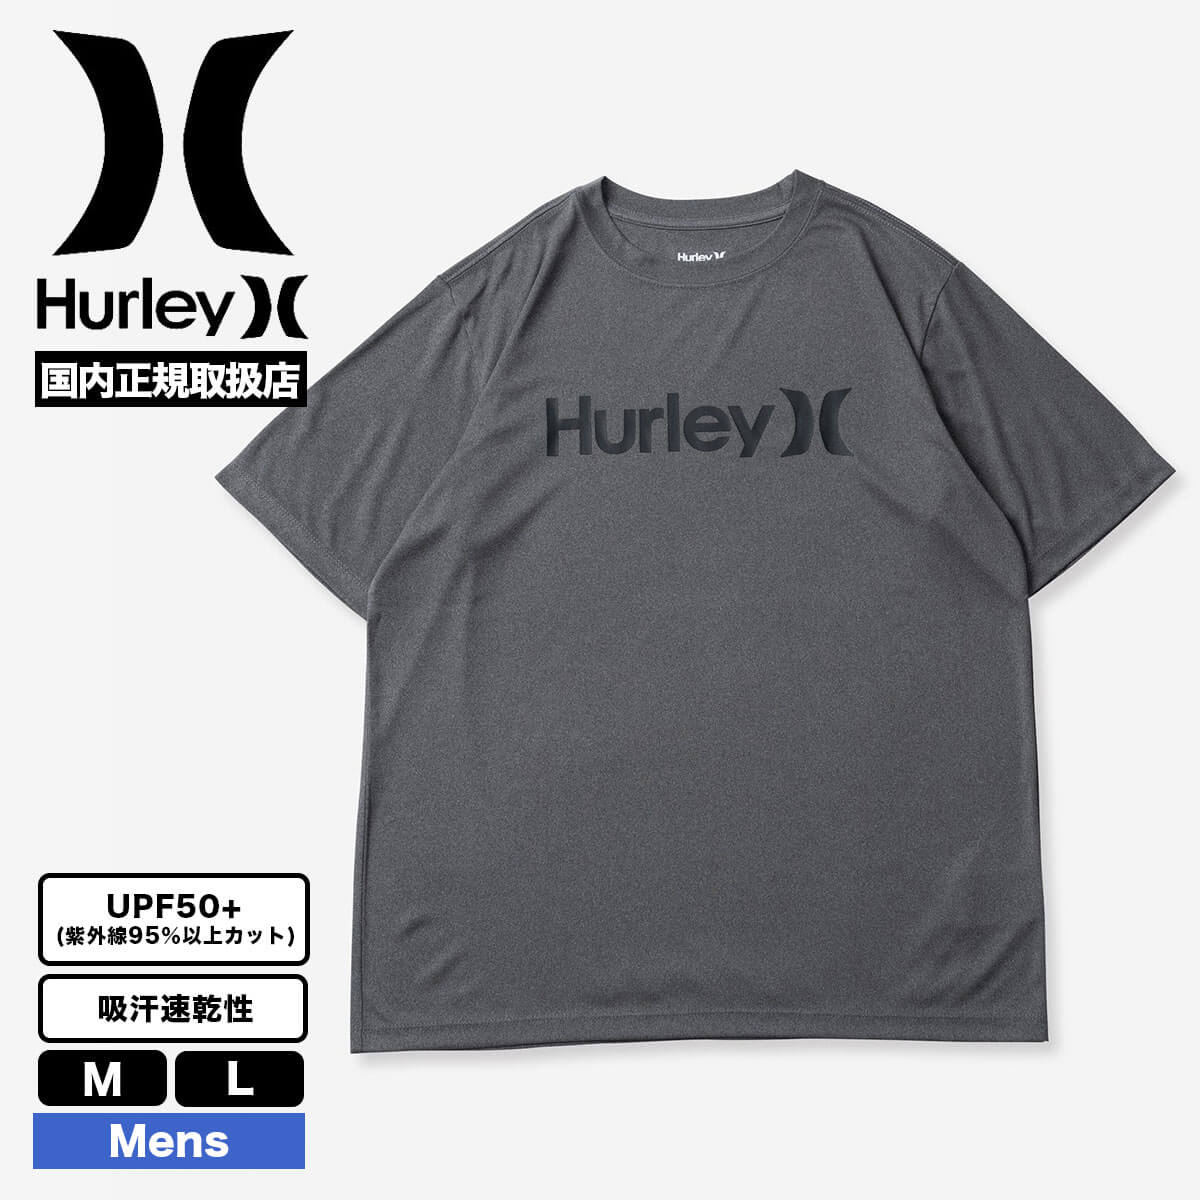 HURLEY ハーレー メンズ 半袖 ラッシュガード 水着 UPF50+ 吸汗速乾 トレーニング 紫...